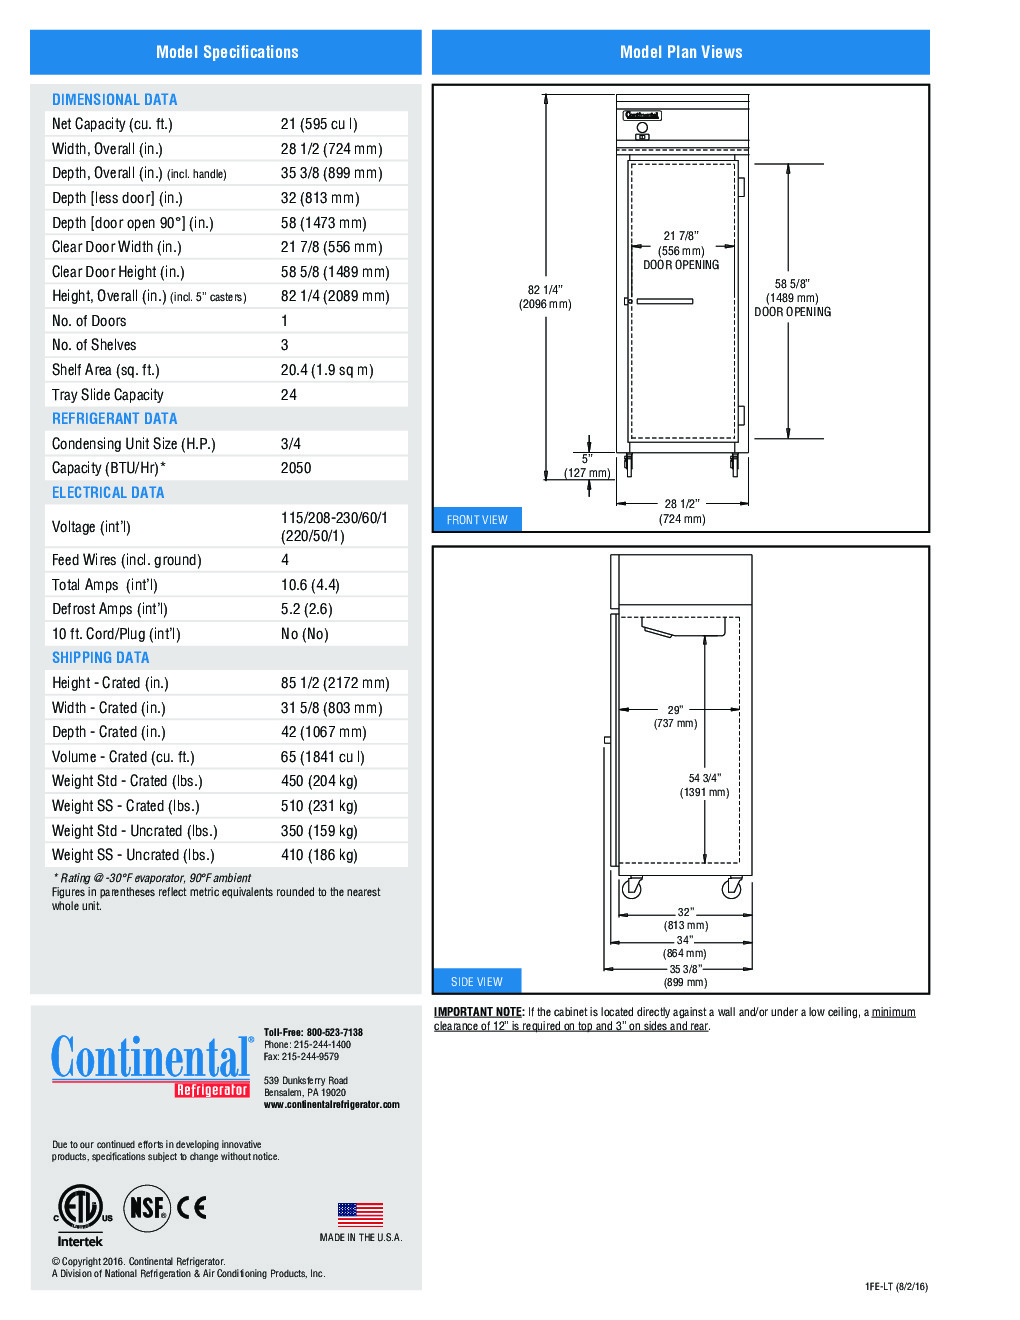 Continental Refrigerator 1FE-LT Reach-In Low Temperature Freezer